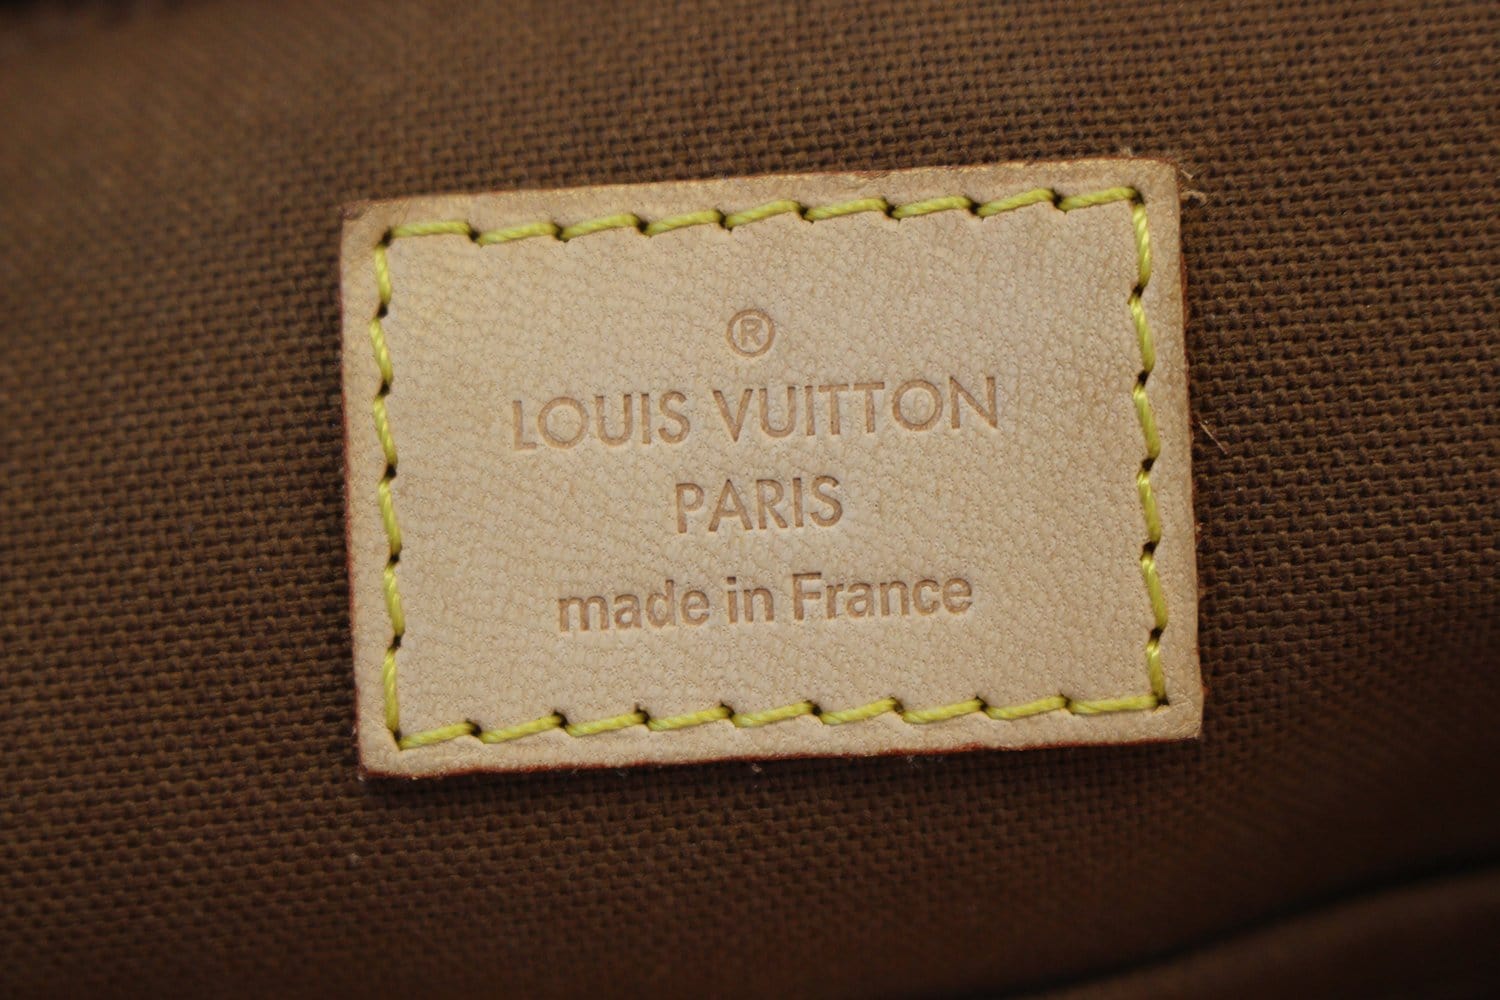 Louis Vuitton M40143 Lv Tivoli Pm Hand Bag